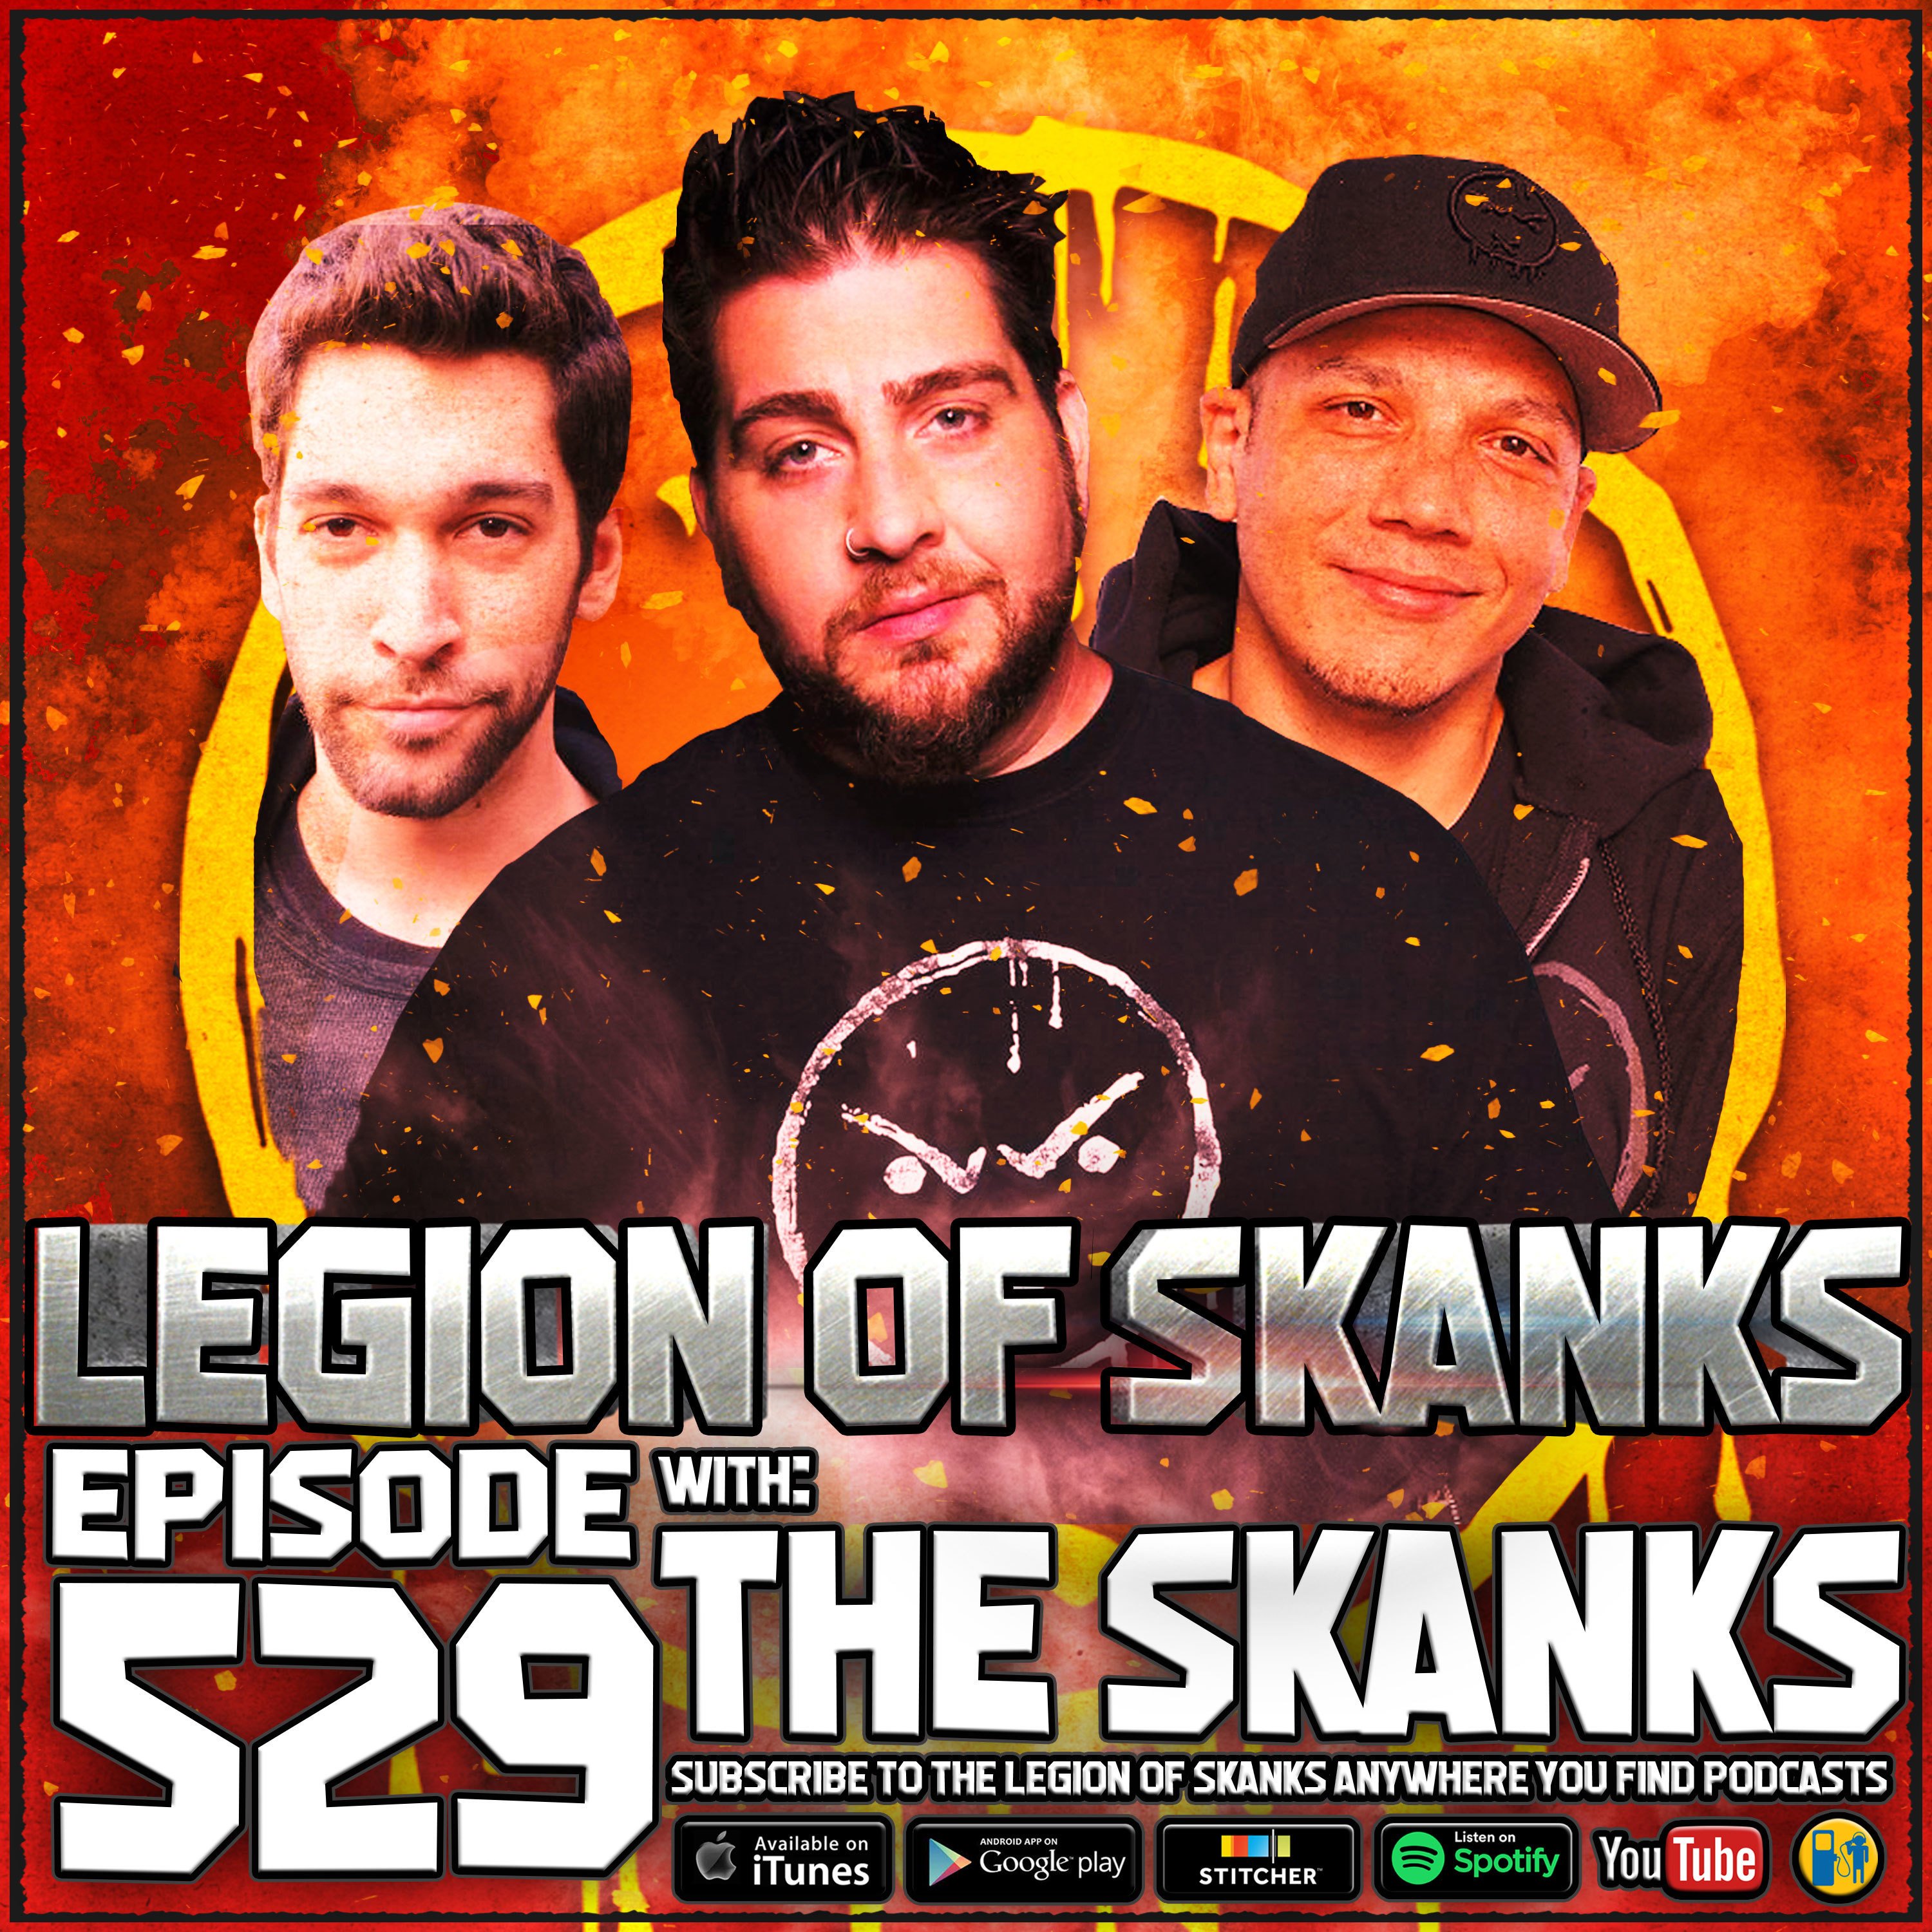 Legion of skanks video